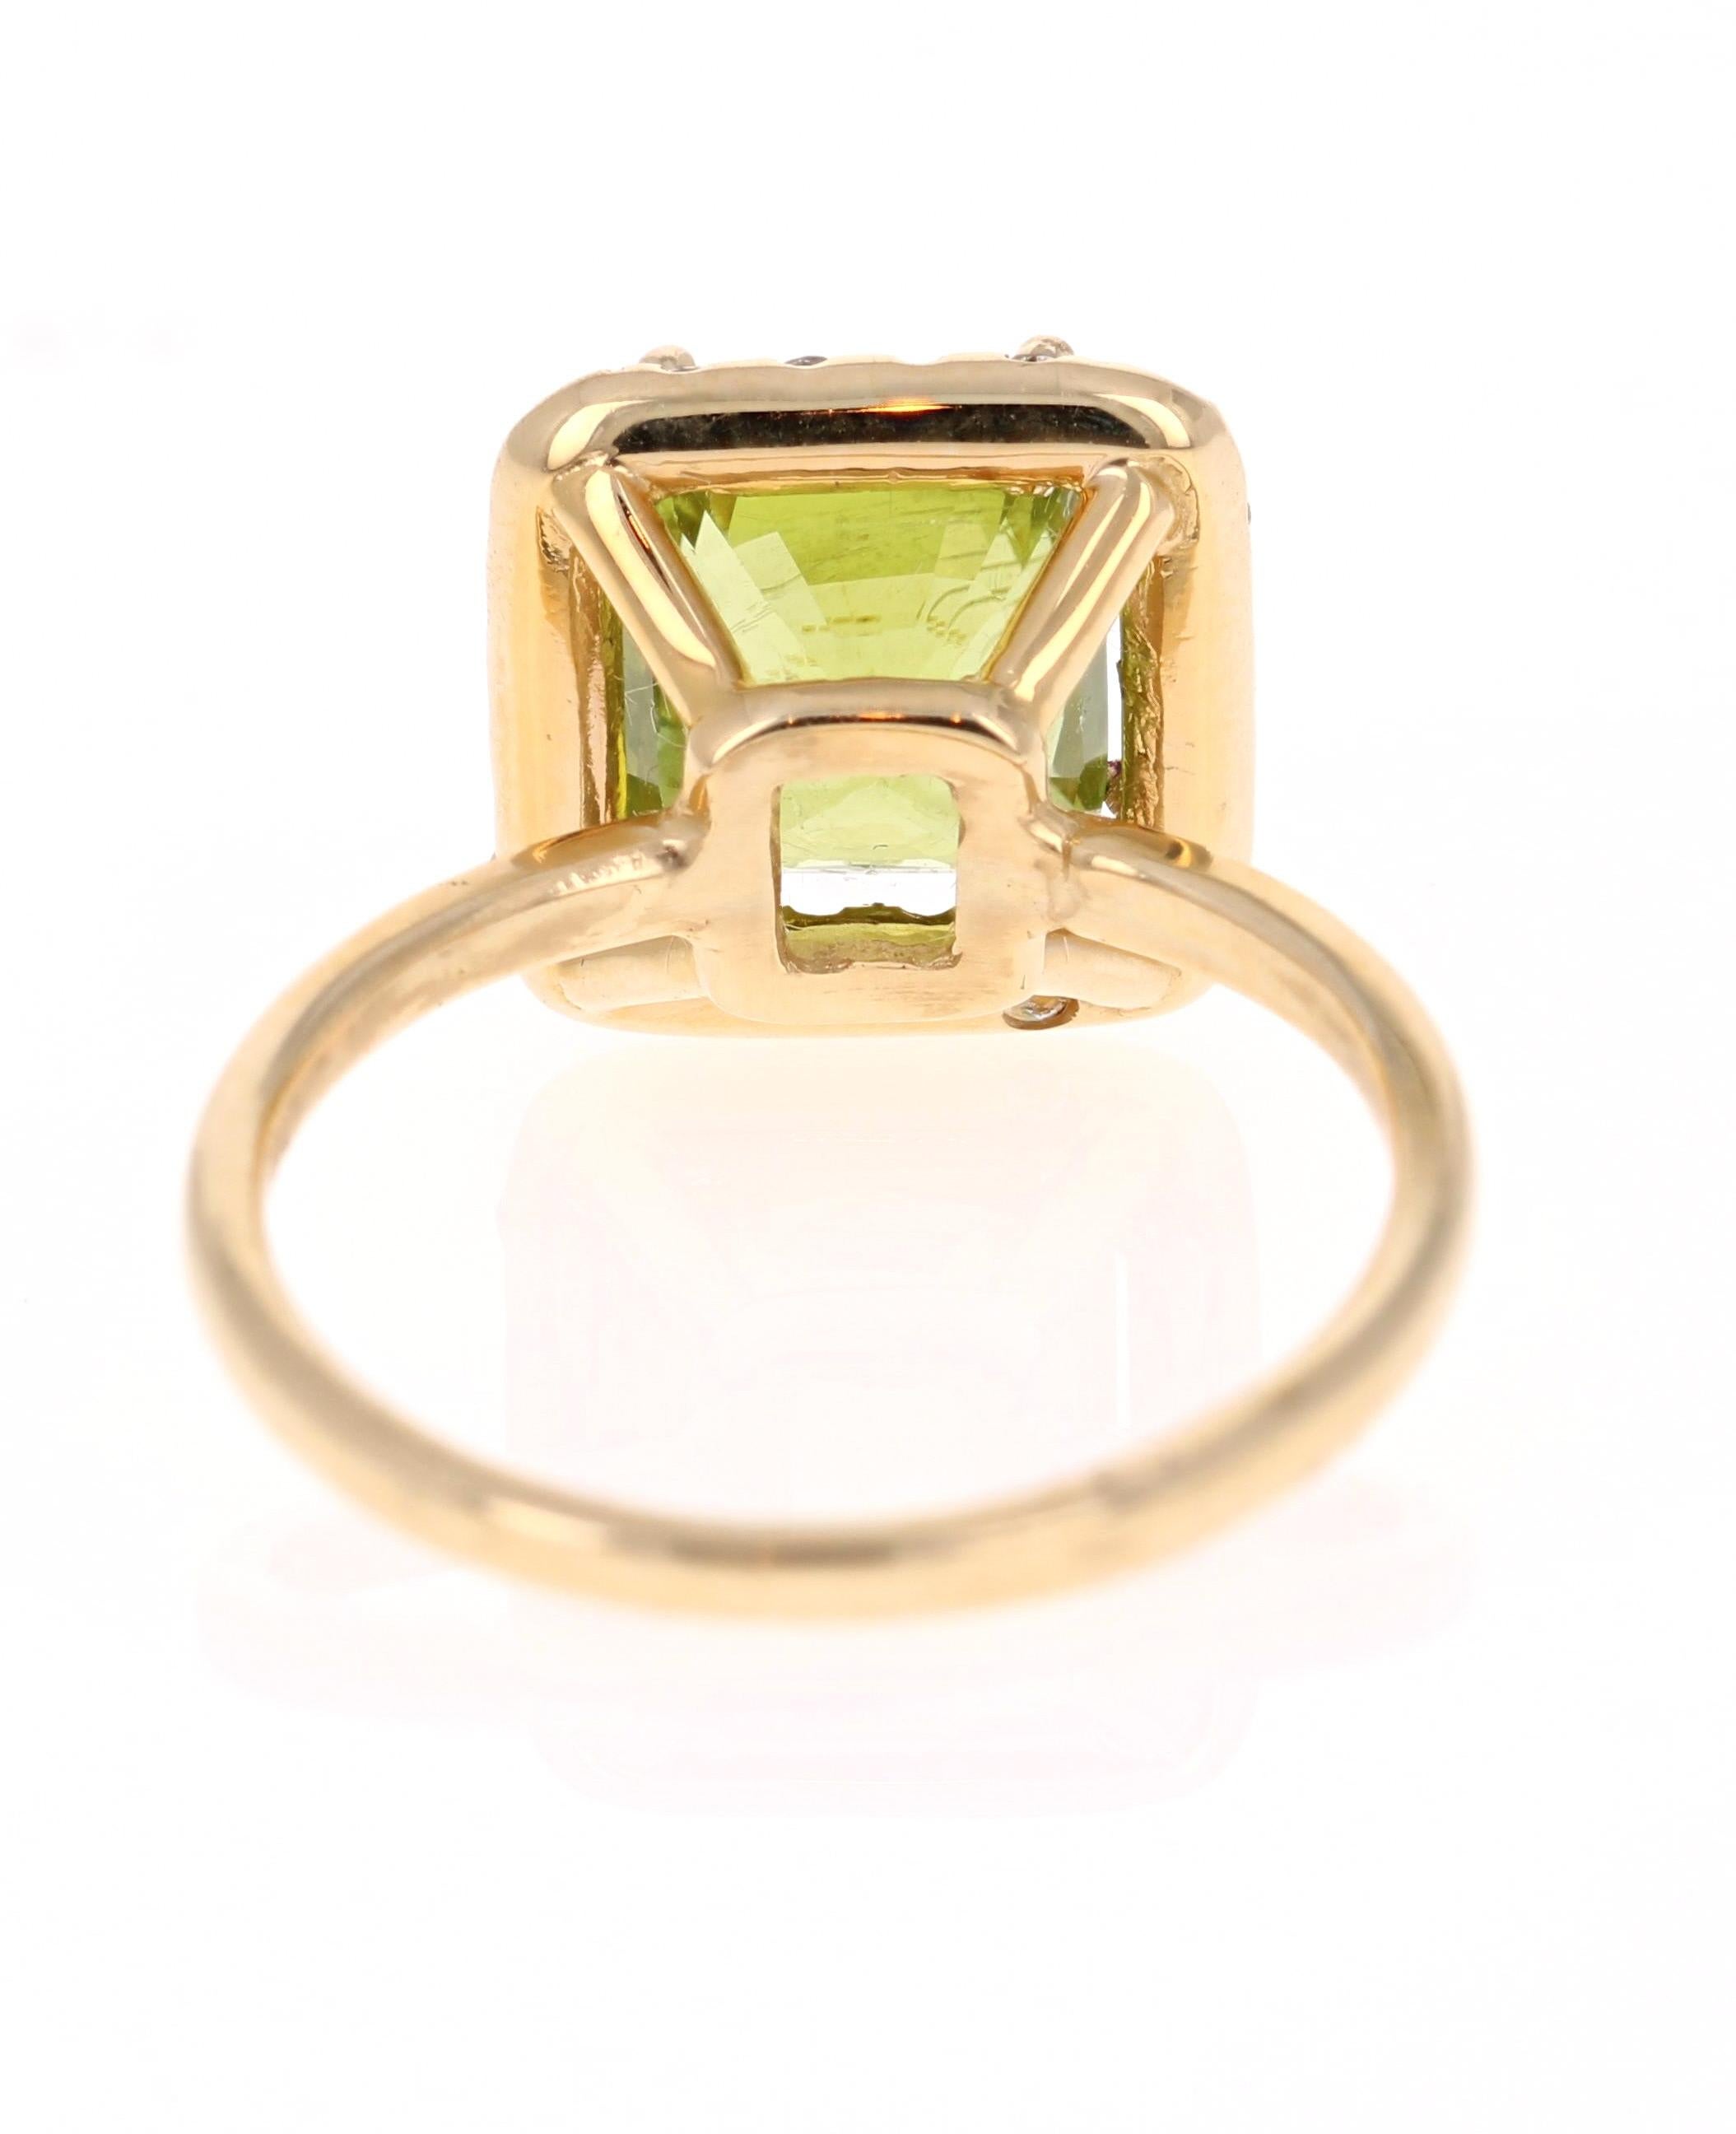 Emerald Cut 3.67 Carat Peridot Diamond 14 Karat Yellow Gold Ring